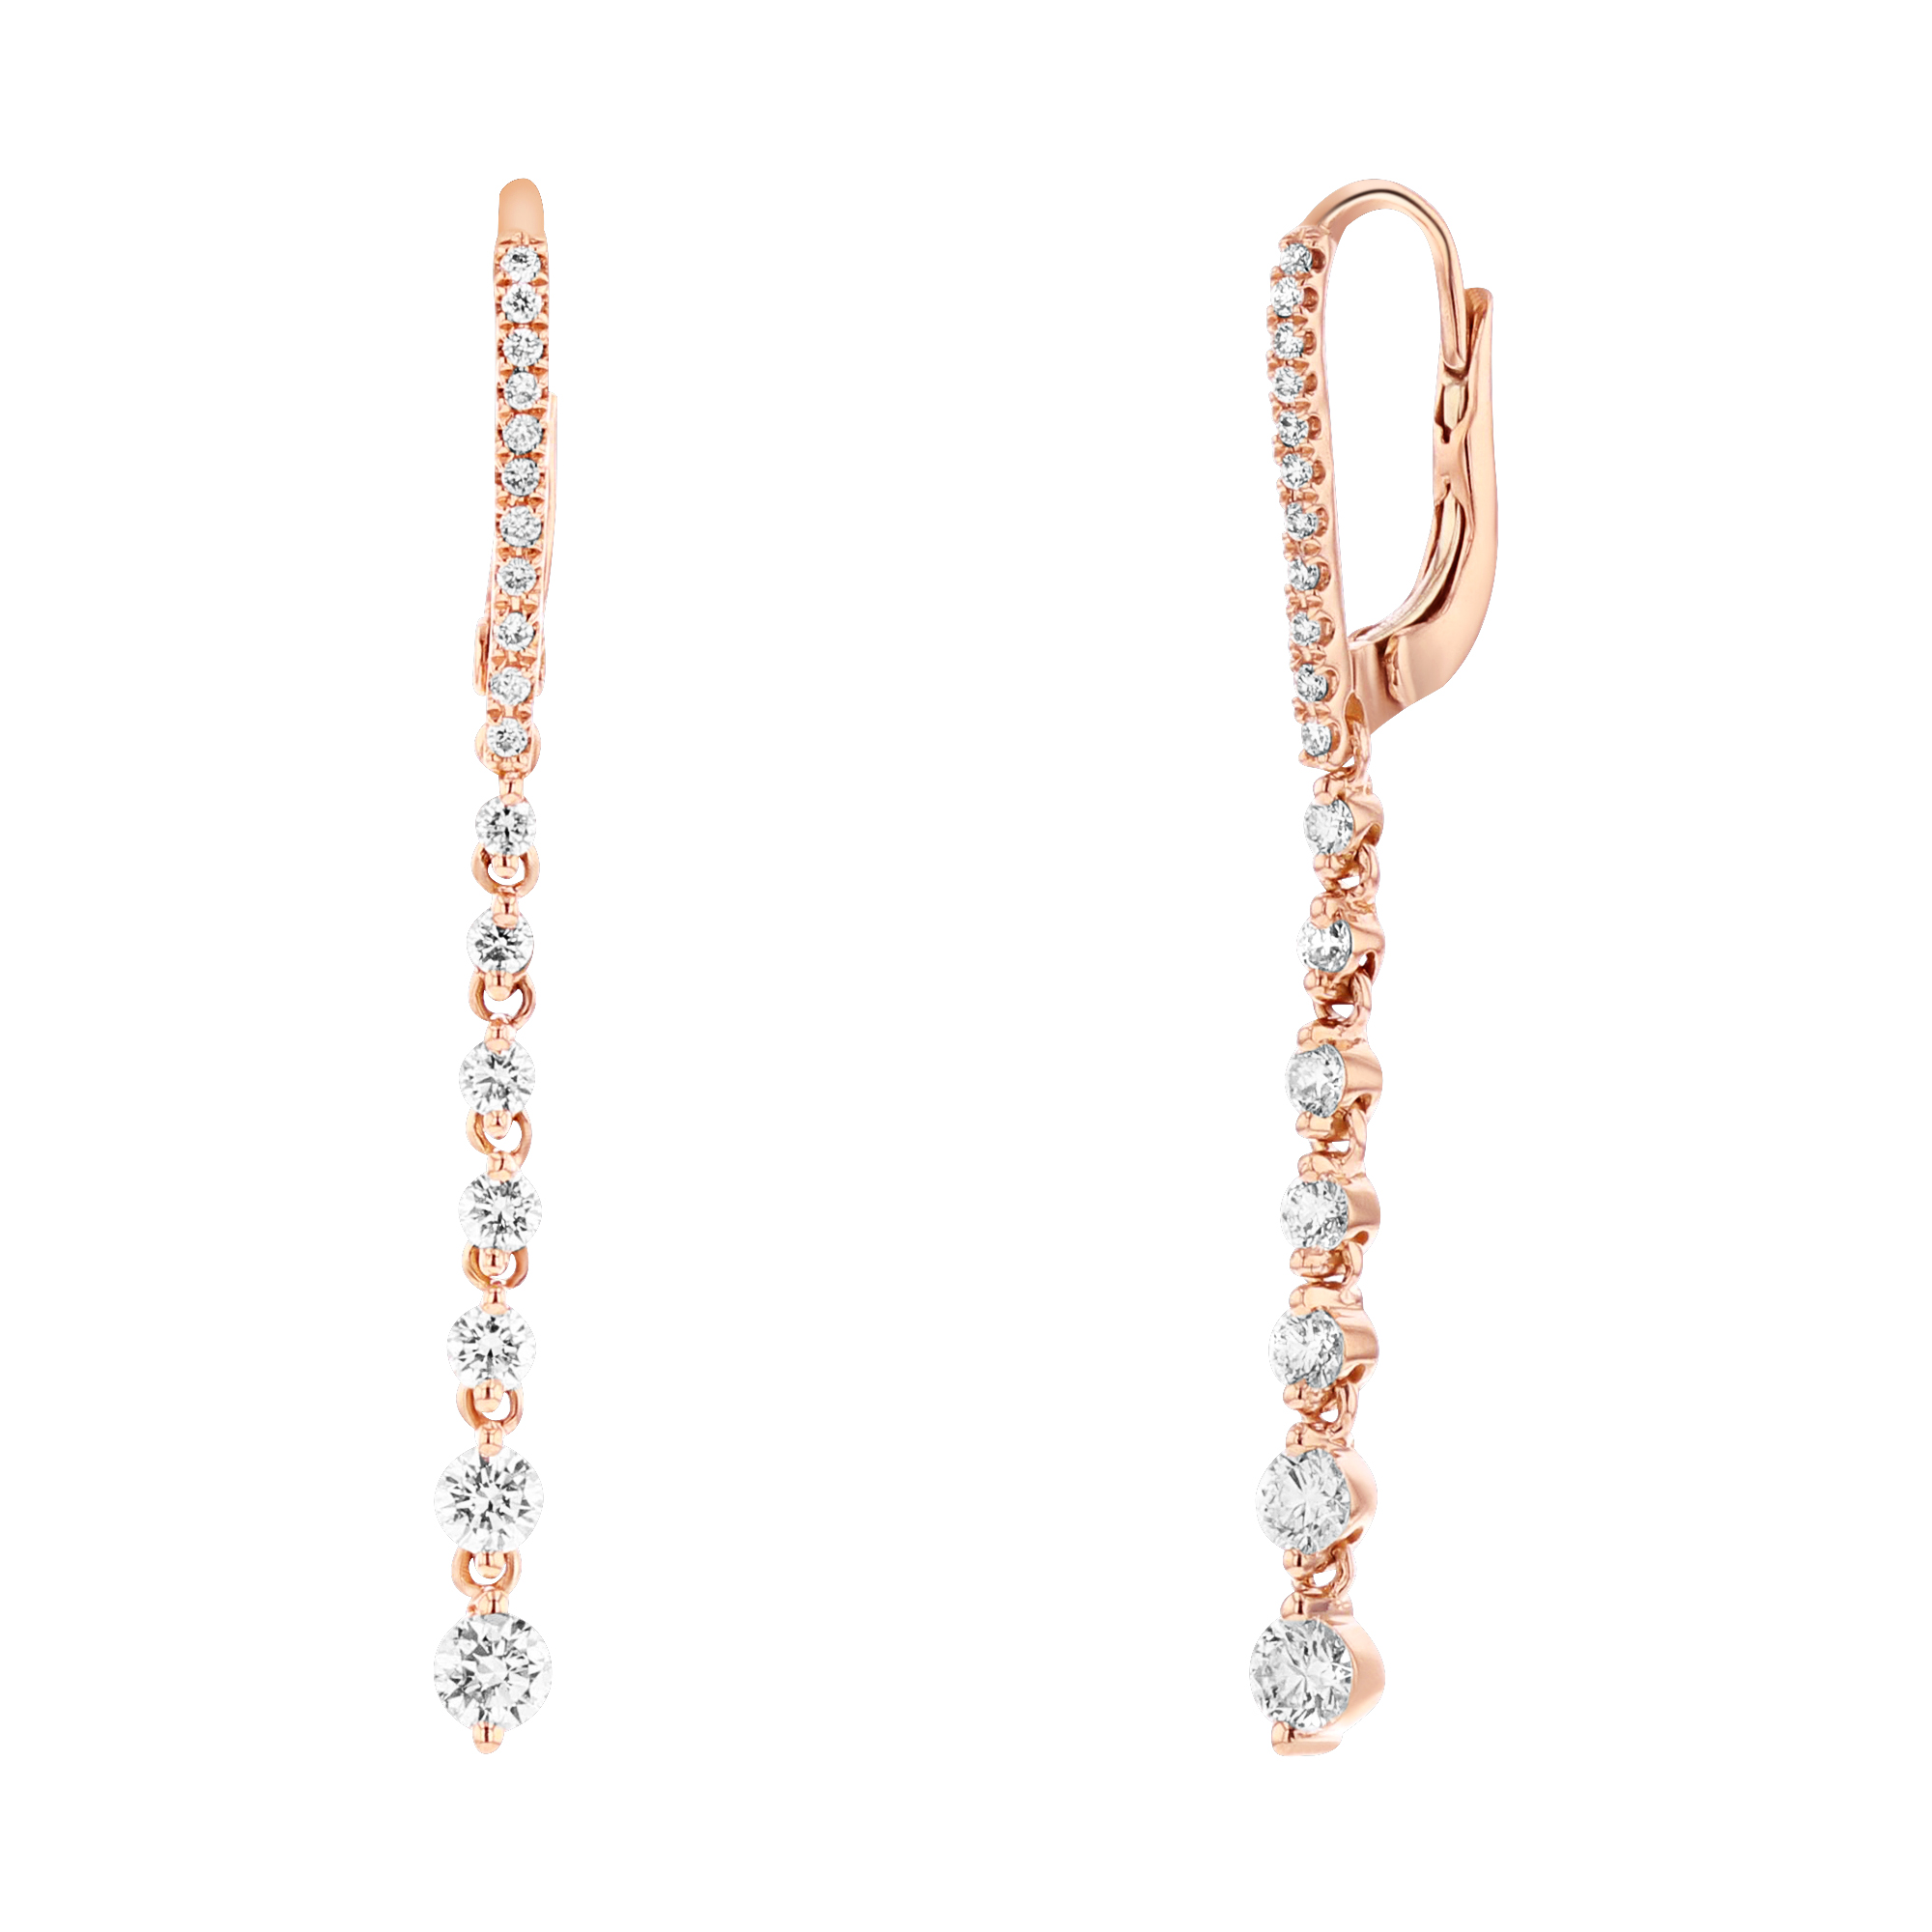 View 0.70ctw Diamond Fashion Earrings in 18k Rose Gold